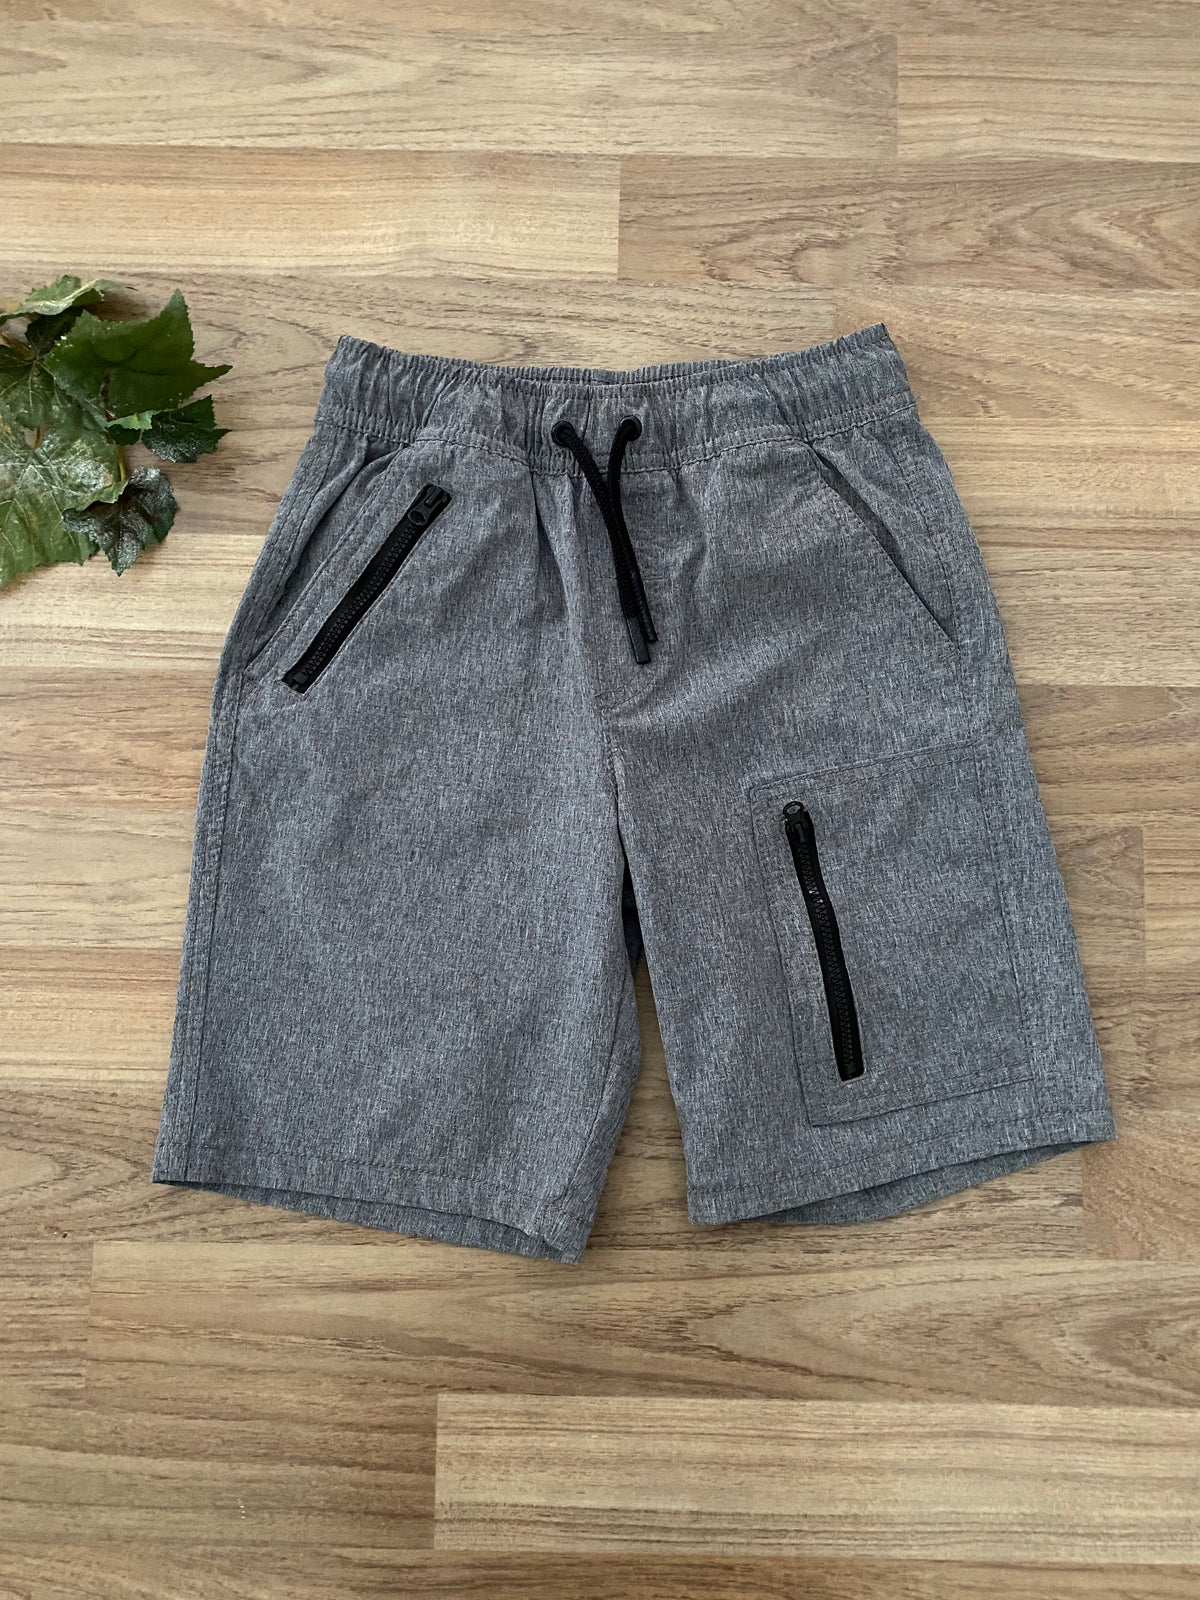 Shorts (Boys Size 6-7)